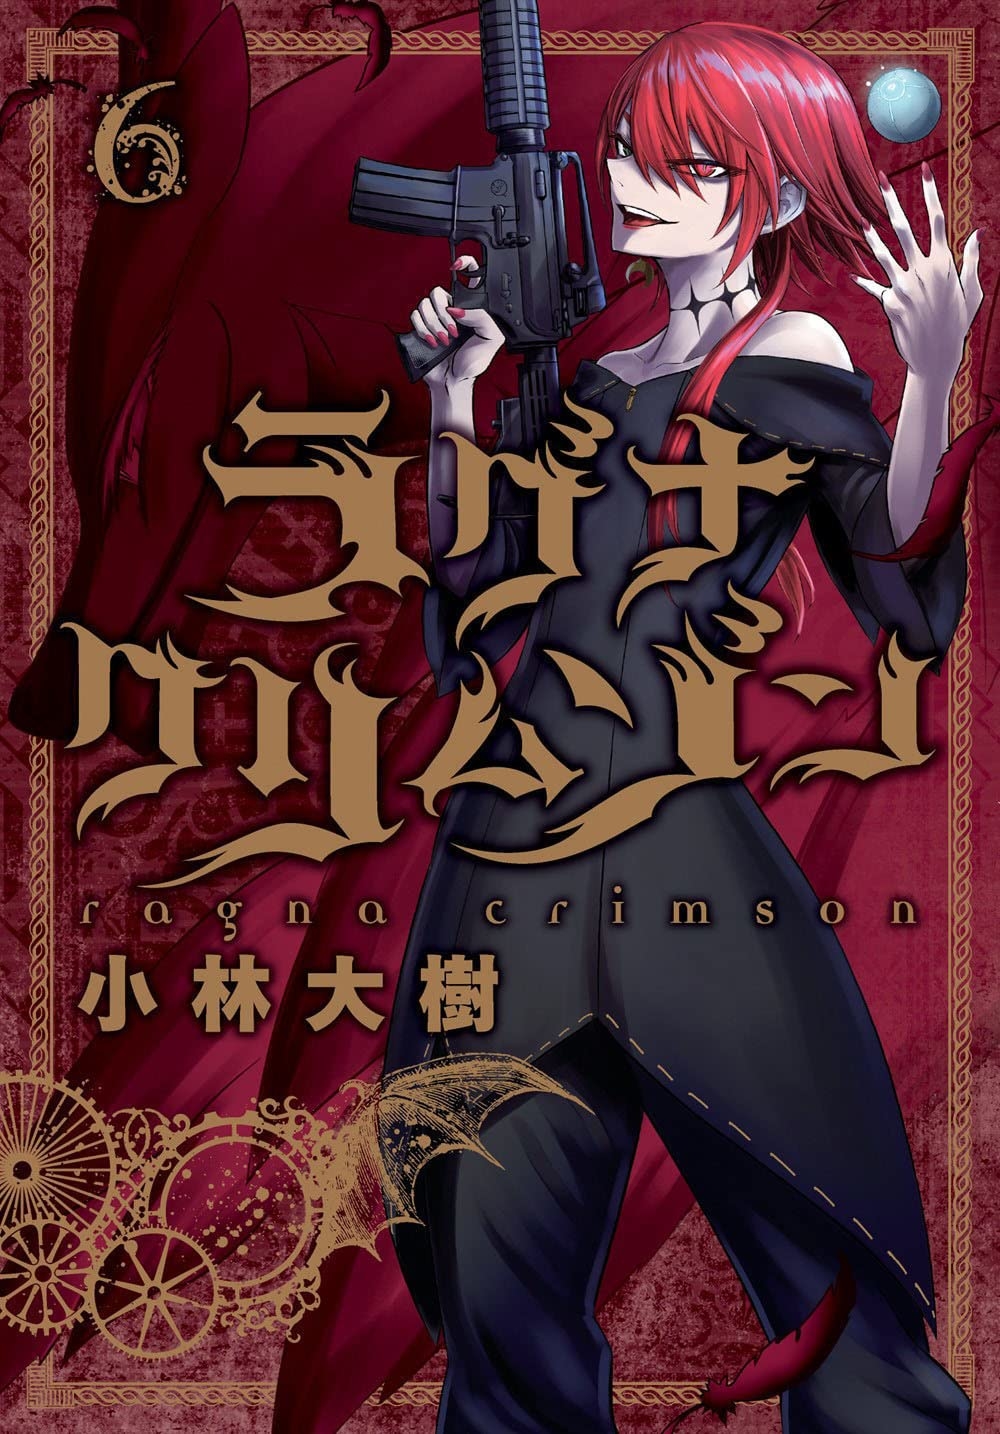 Ragna Crimson Manga Volume 6